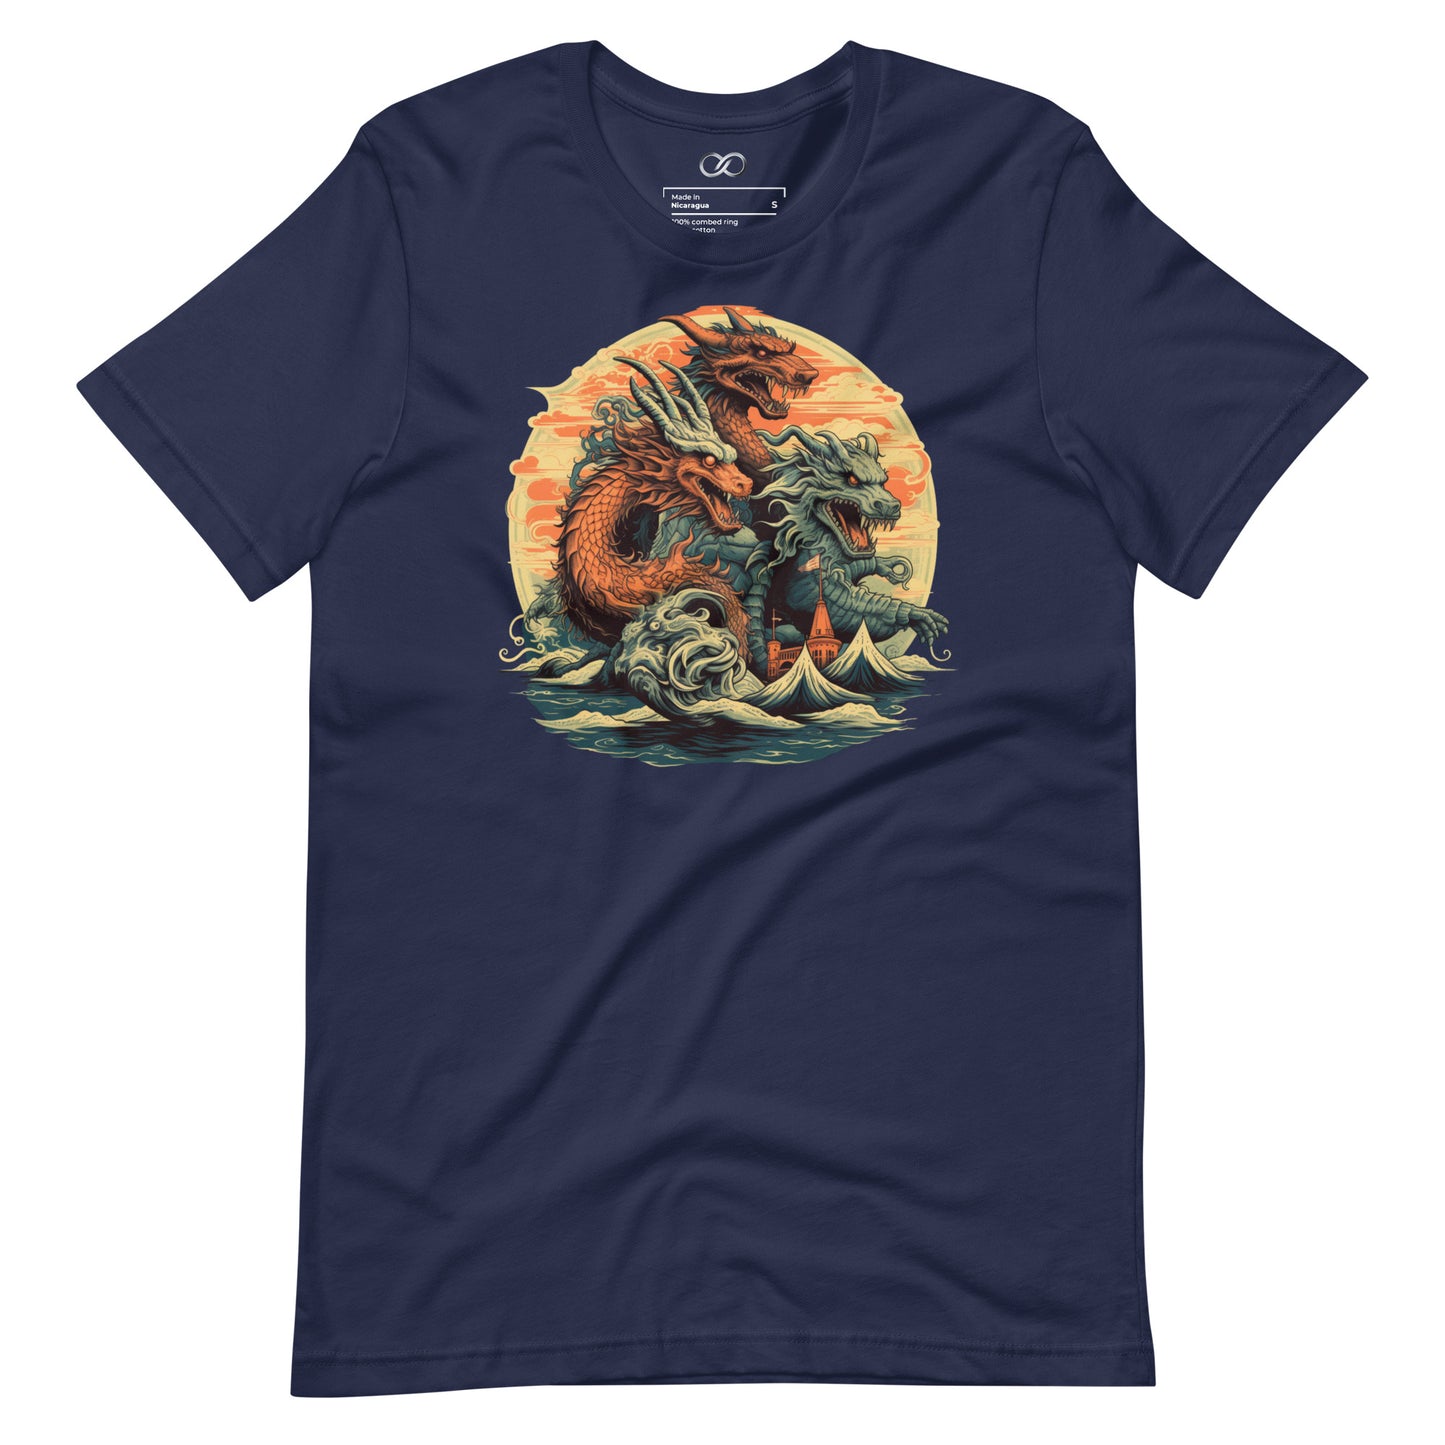 Epic Dragons Print Tee - Mythical Dragons T-shirt